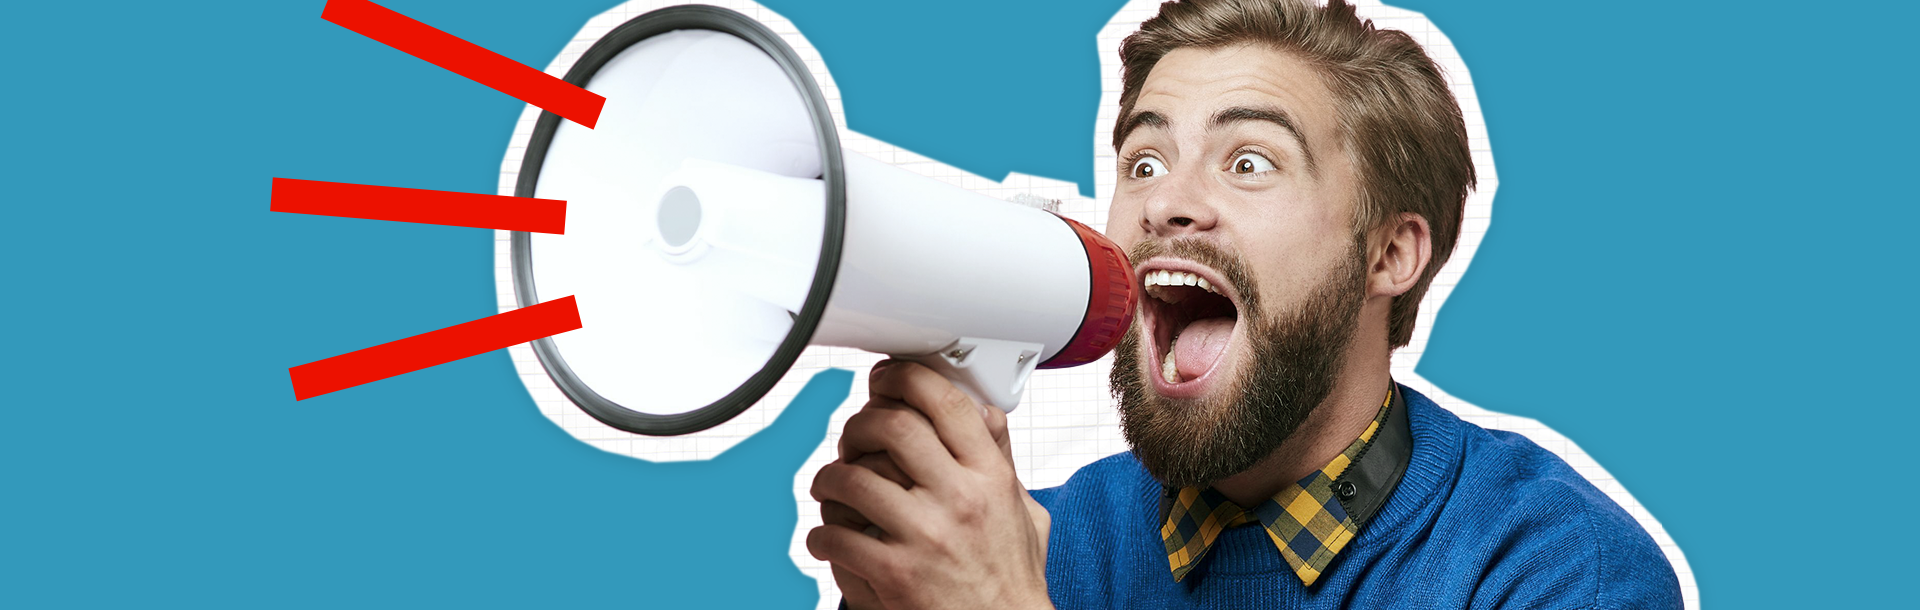 A man shouting into a megaphone